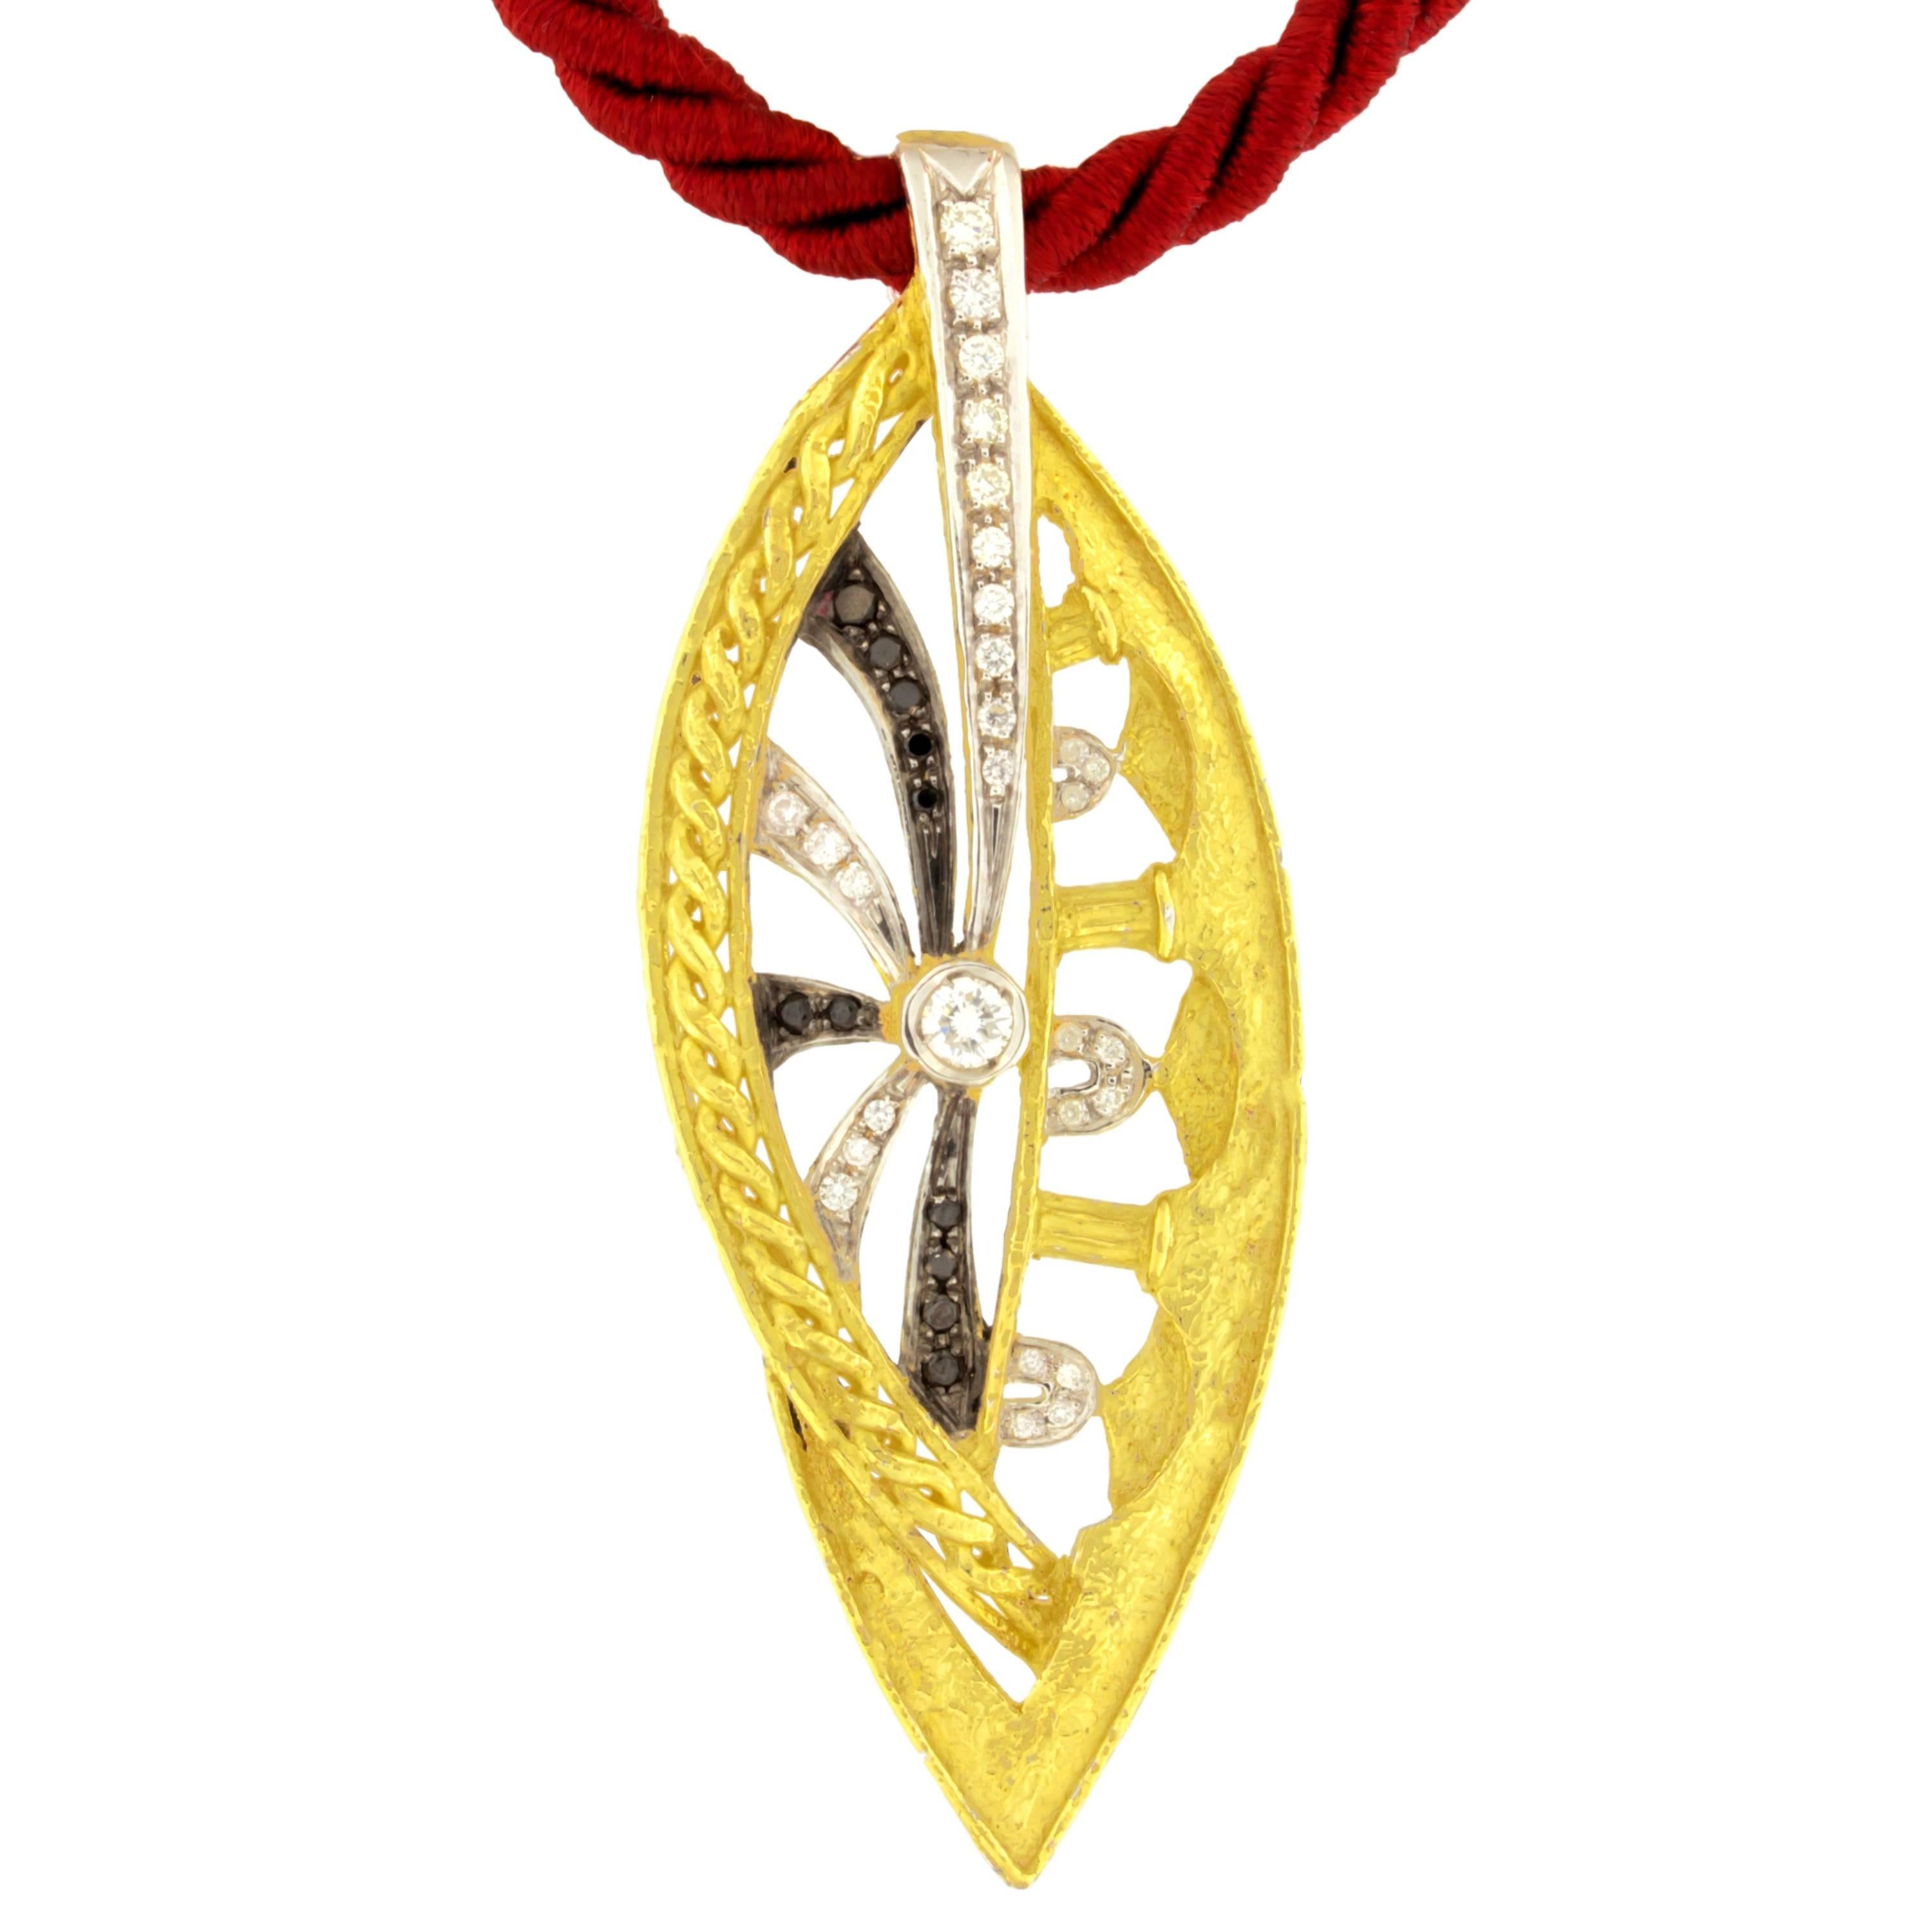 Sacchi "Domus" Black and White Diamonds 18 Karat Yellow Gold Pendant Necklace For Sale